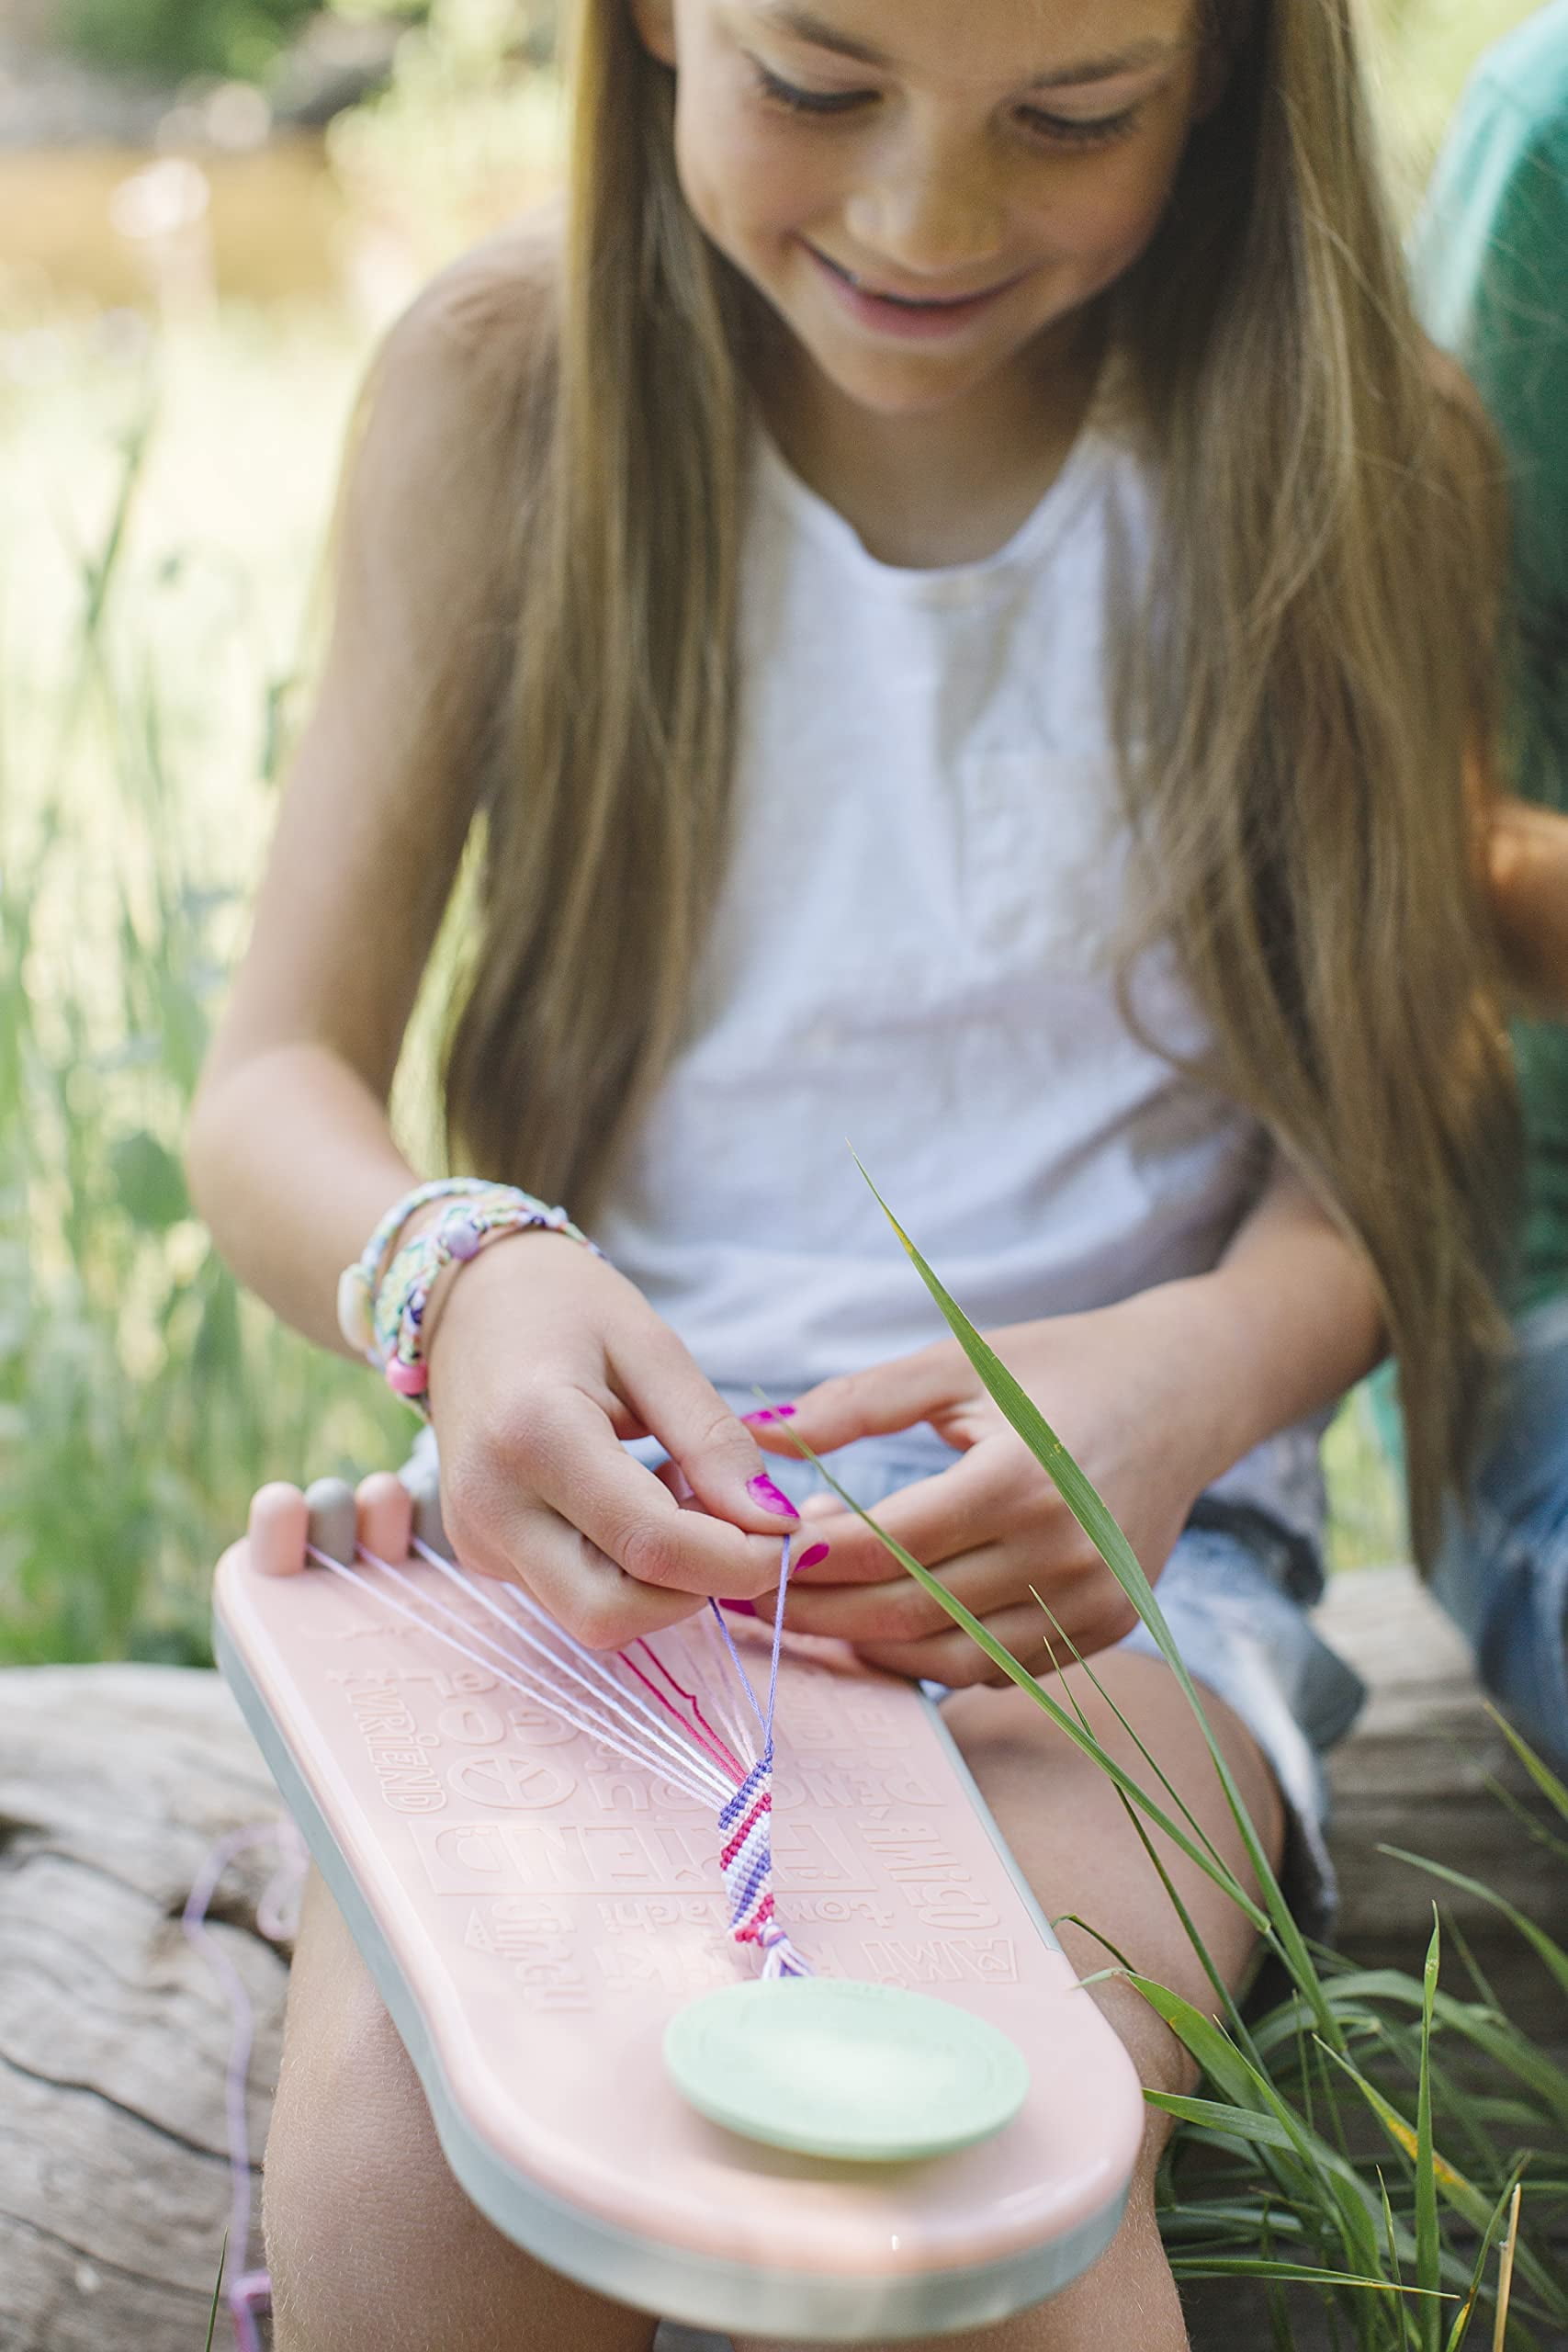 Friendship Bracelet Making Kit Toys, 20 Pre-Cut Threads - Makes Up